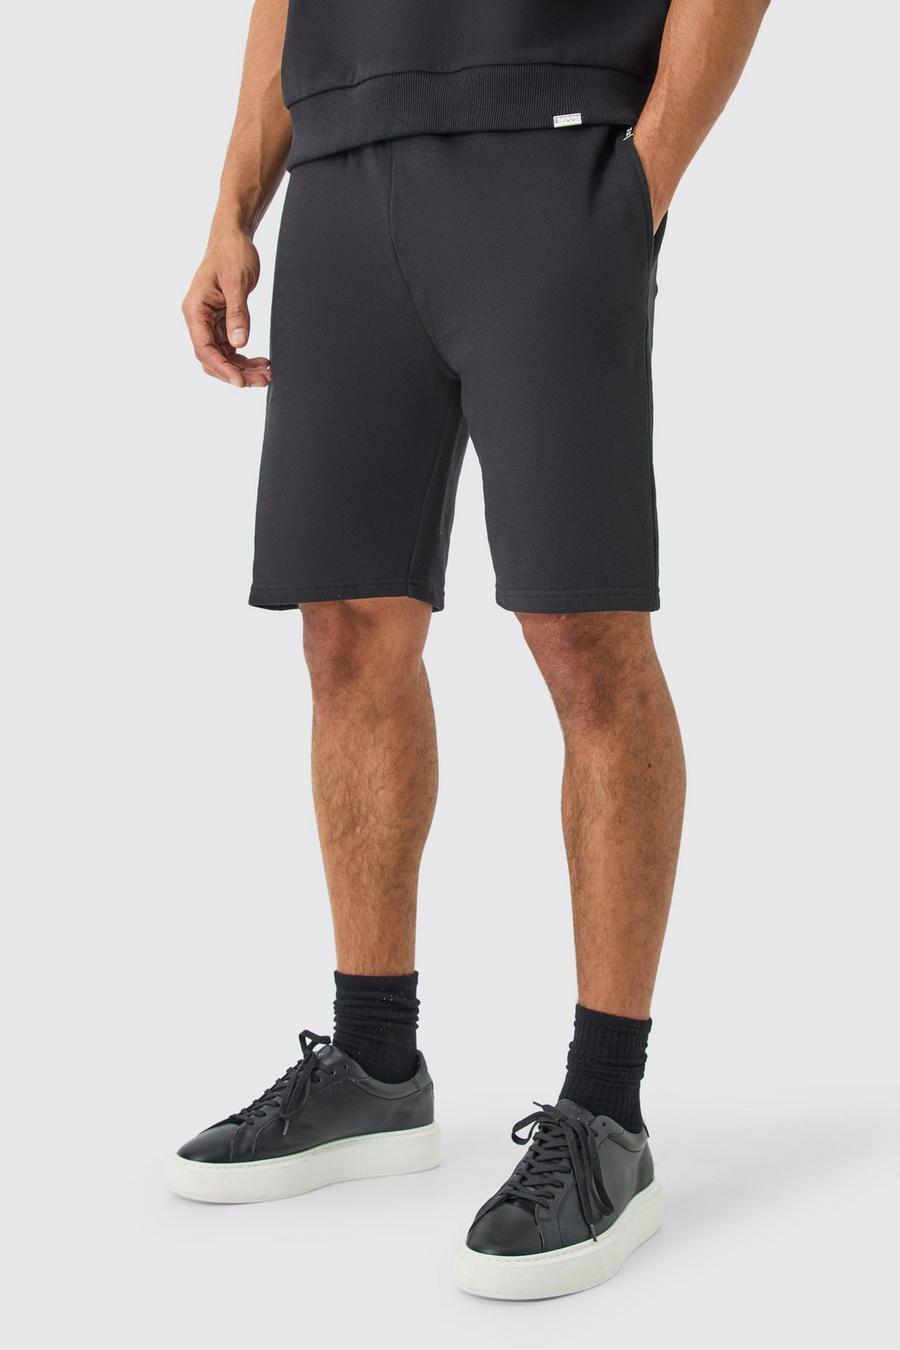 Lockere mittellange Shorts, Black